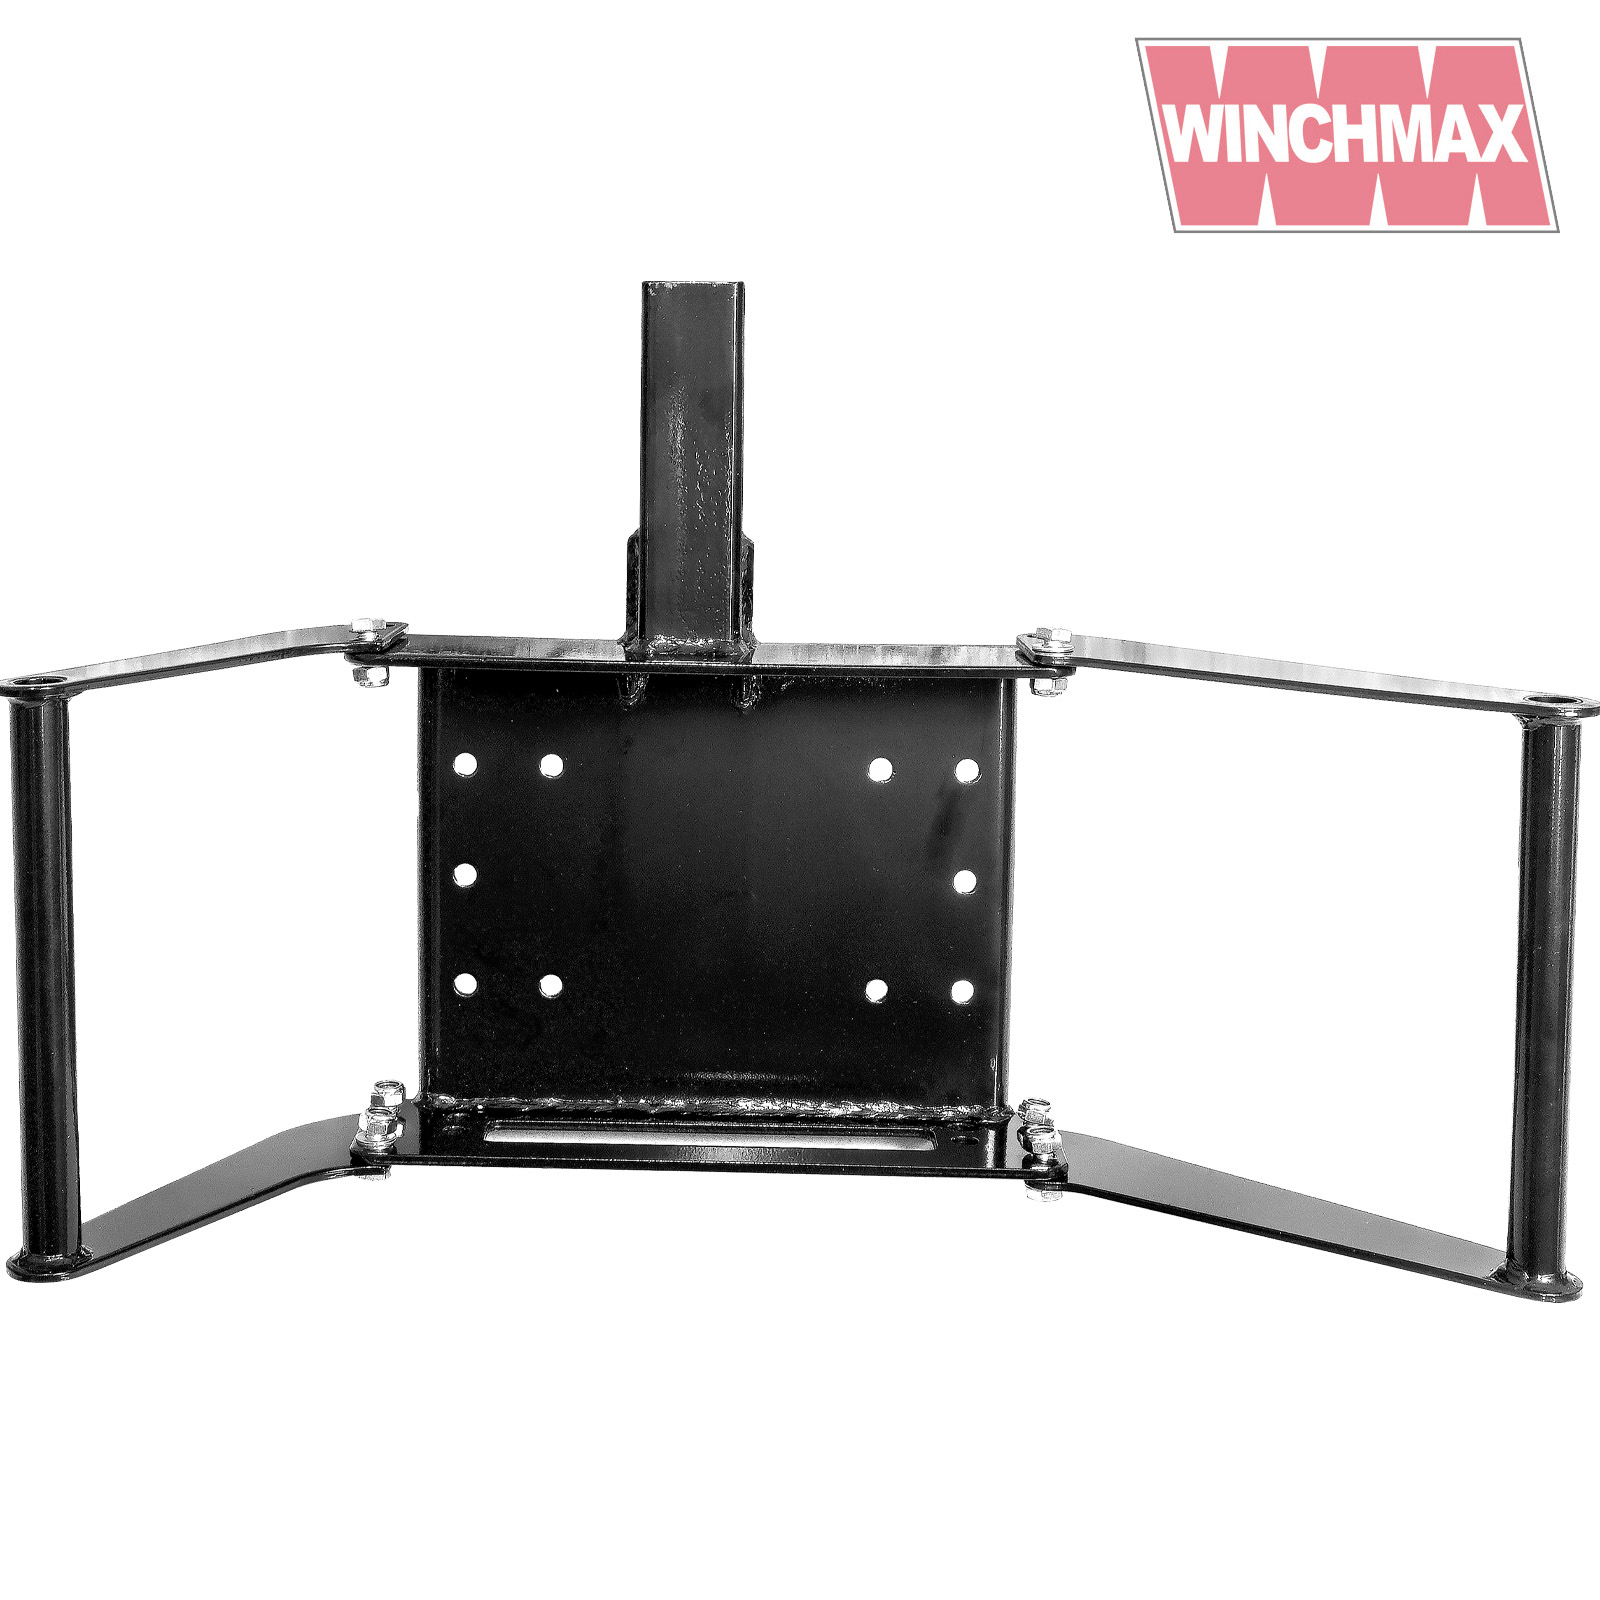 Winchmax WMMP5 Mobile Winch Mount